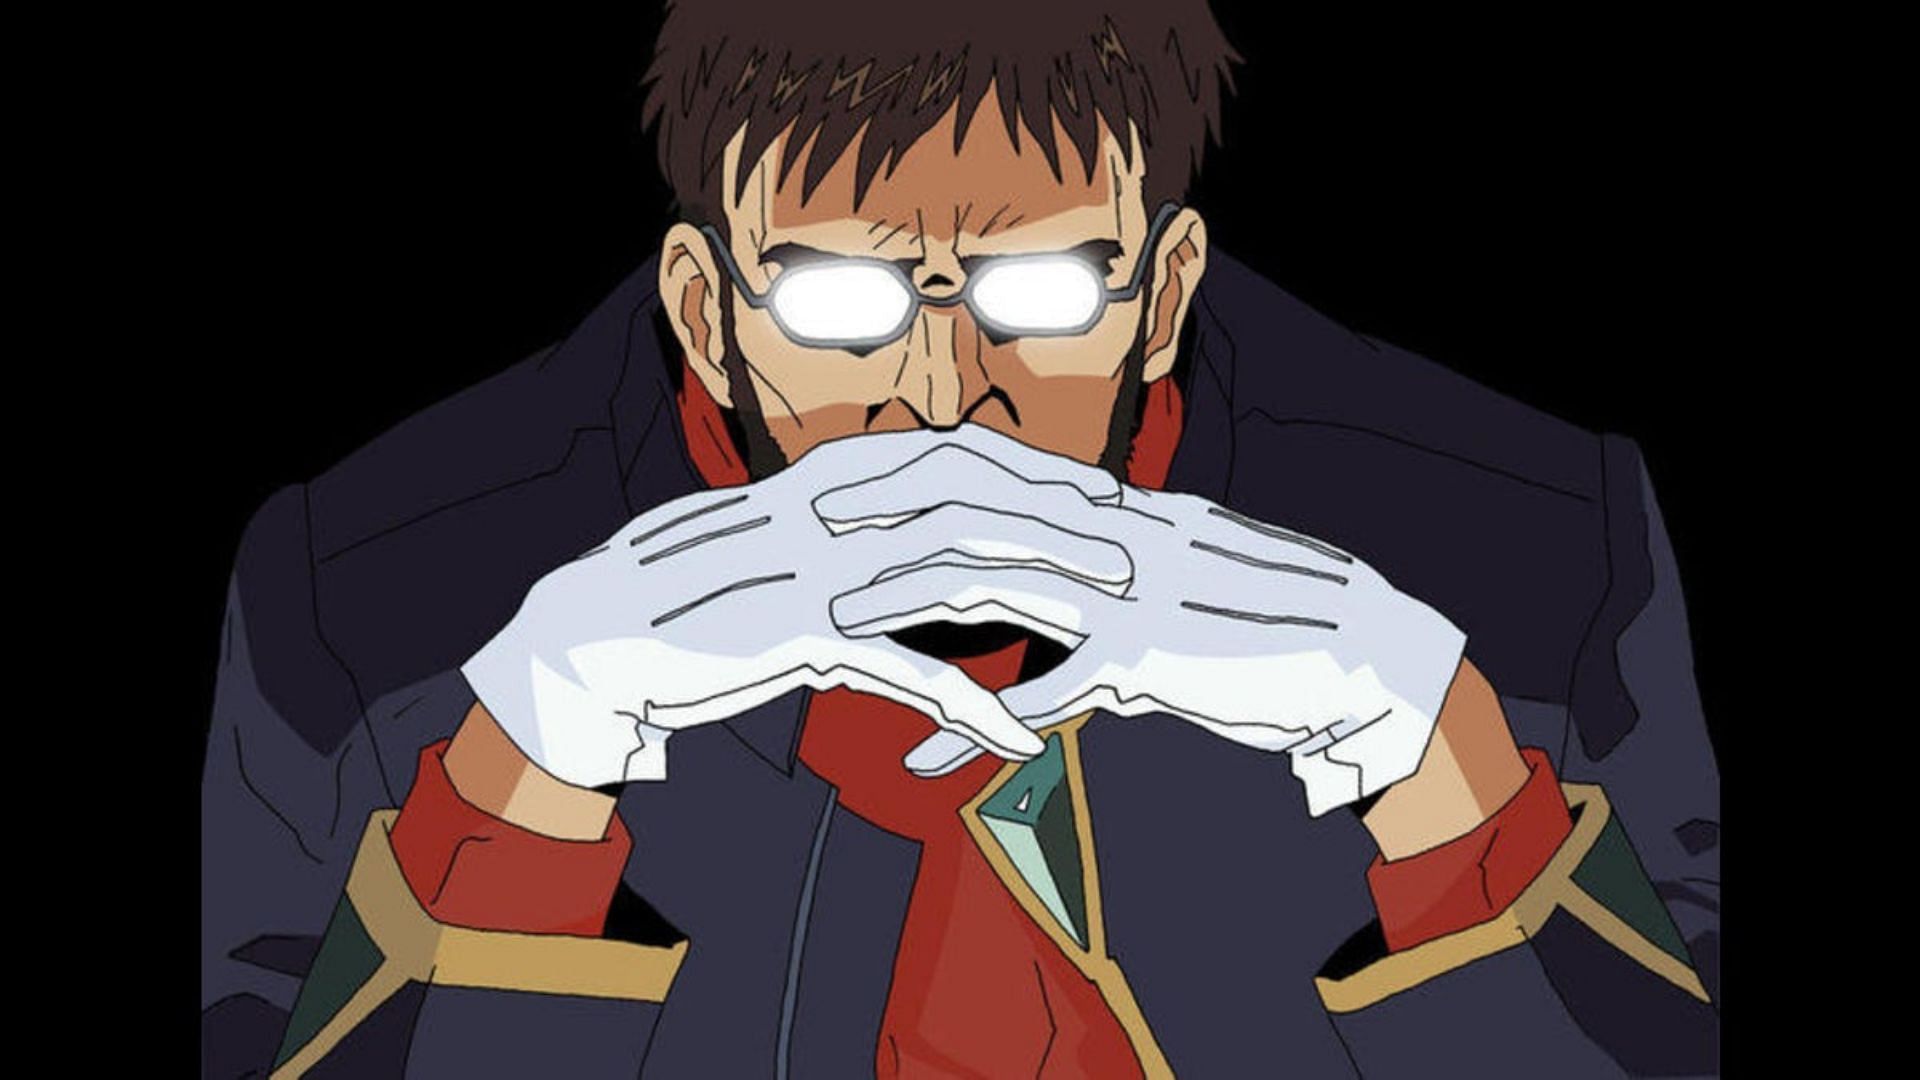 Gendo Ikari is known as one of the most disliked anime villains (Image via Studio Gainax)